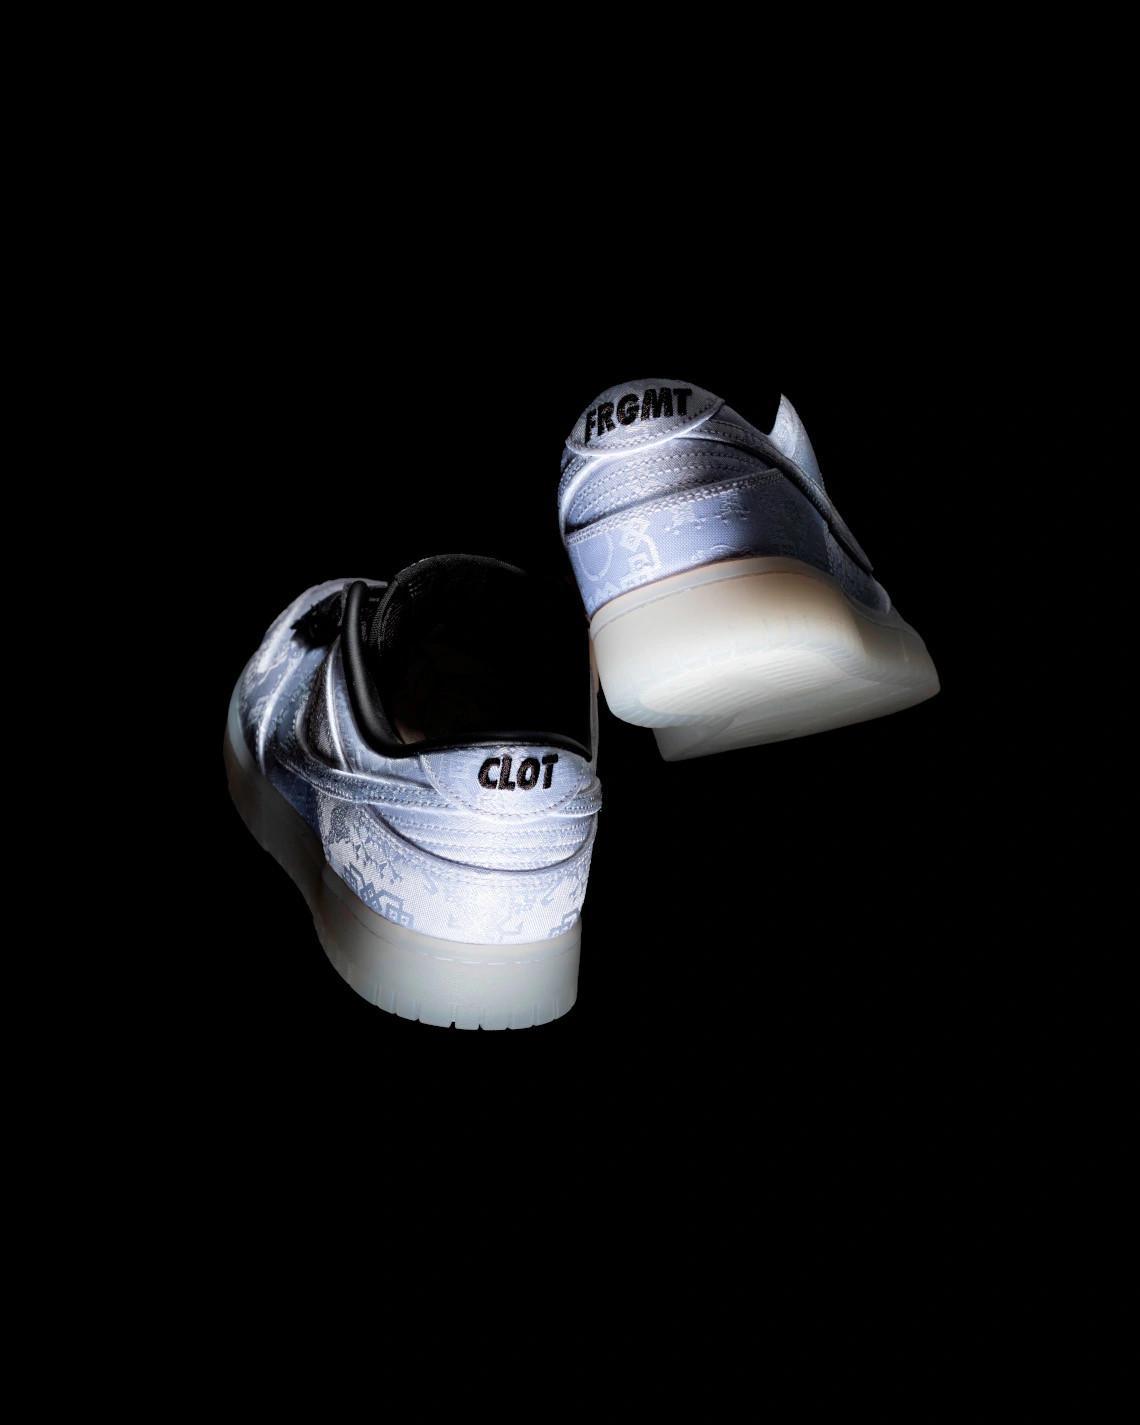 Le CLOT x fragment design x Nike Dunk Low sortira le 19 mai